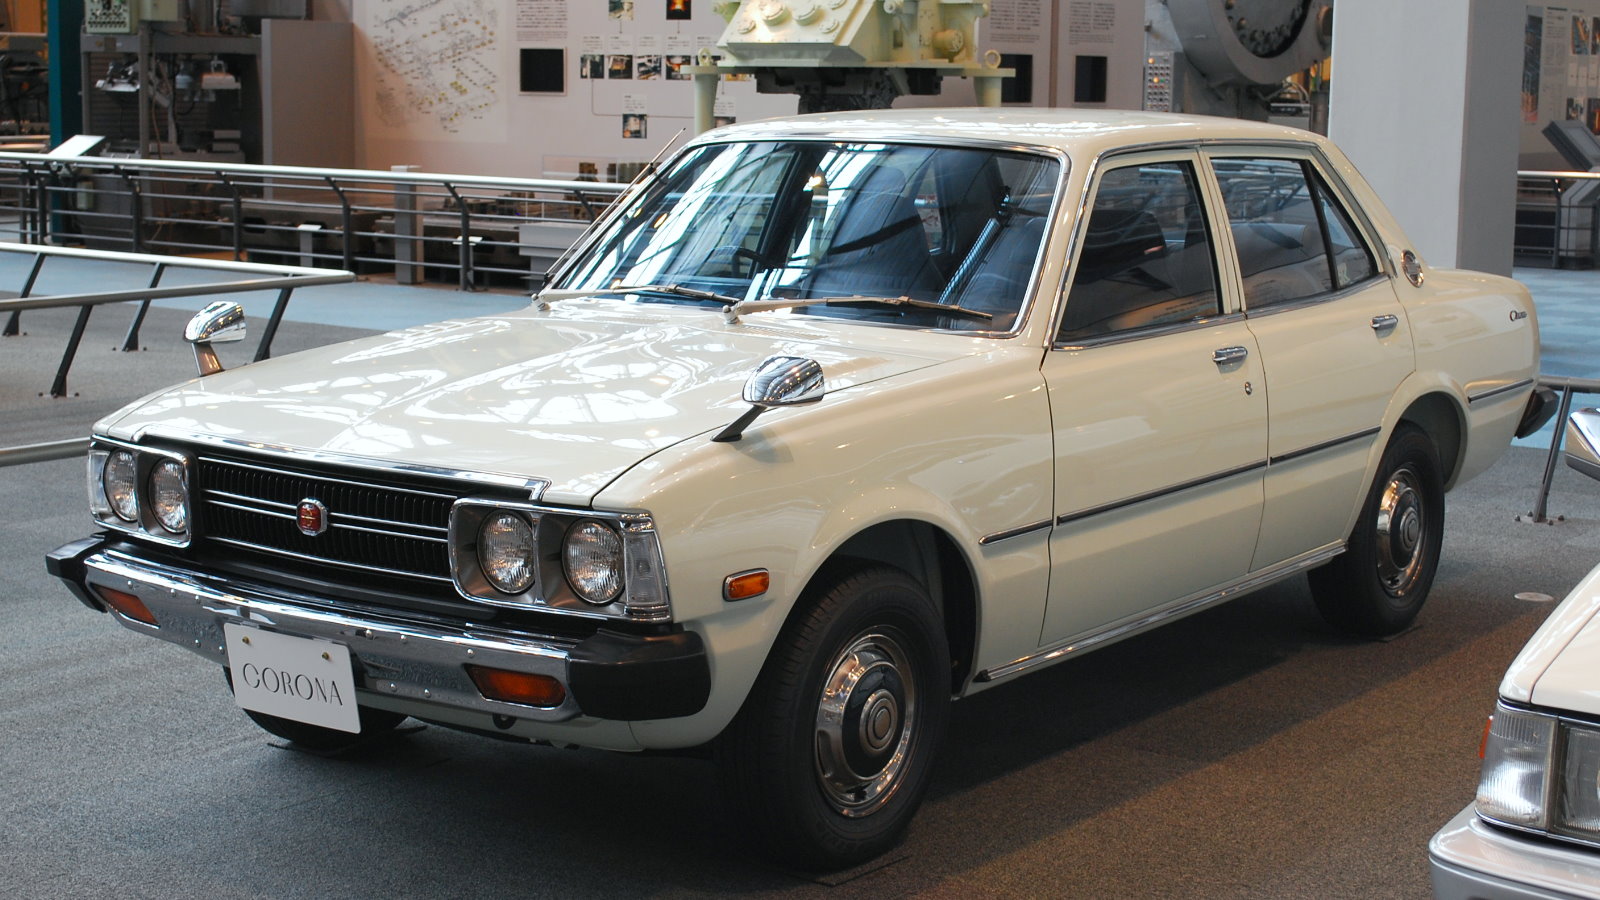 Dossier: 1973 Toyota Corona 01.jpg - Wikimedia Commons